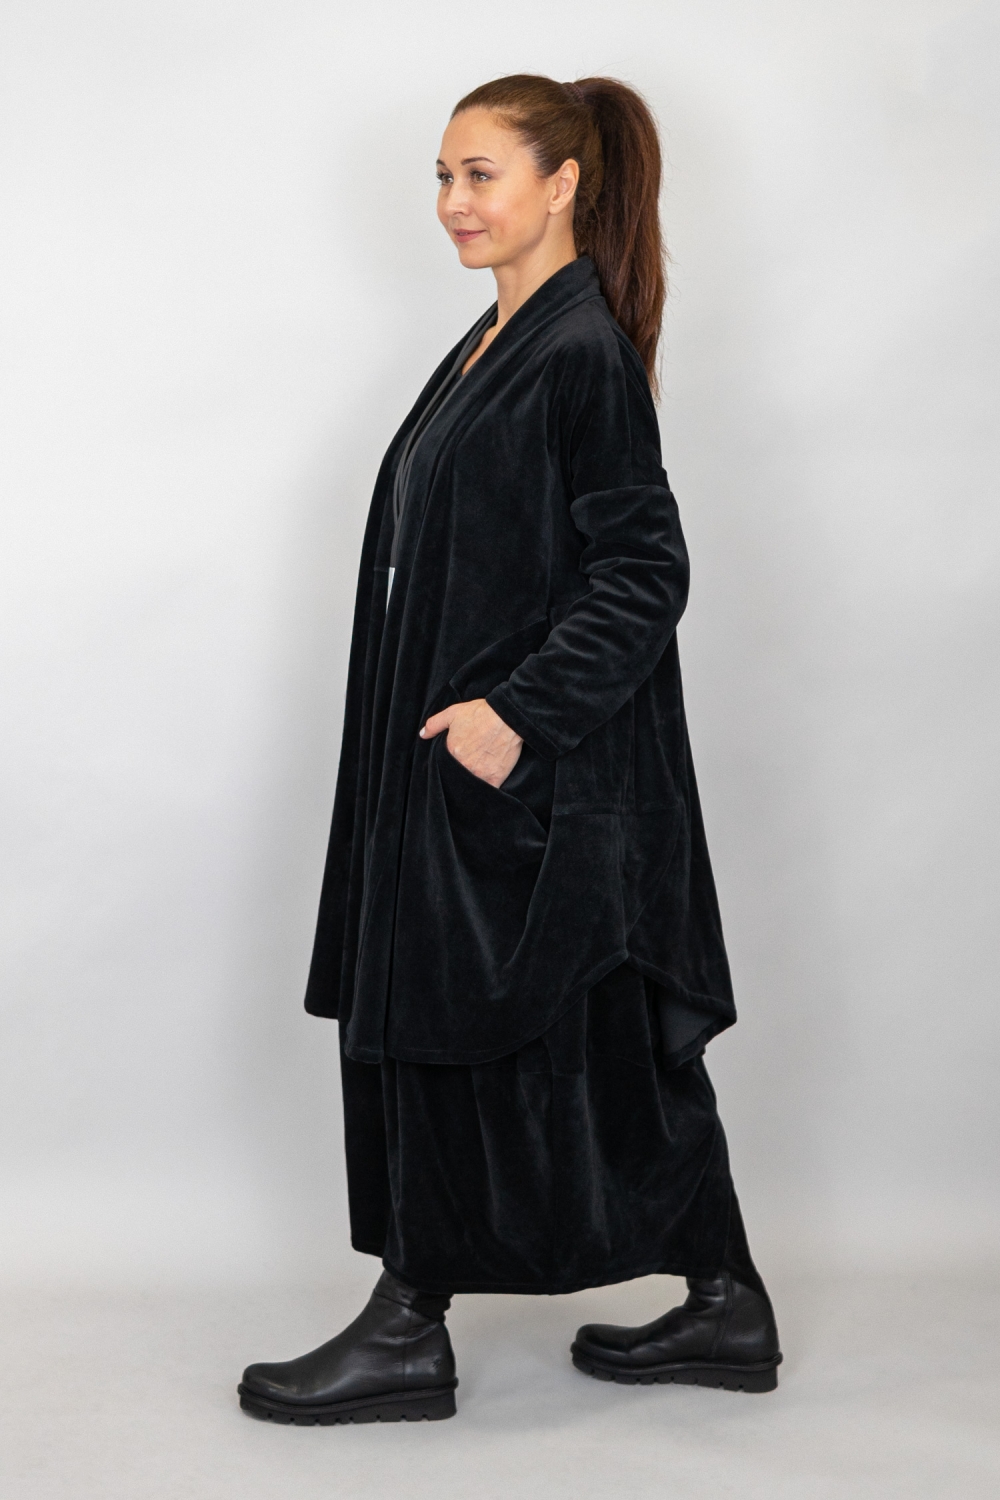 Sassy Jacke in Tulpenform aus Nicky Velours Stoff in schwarz